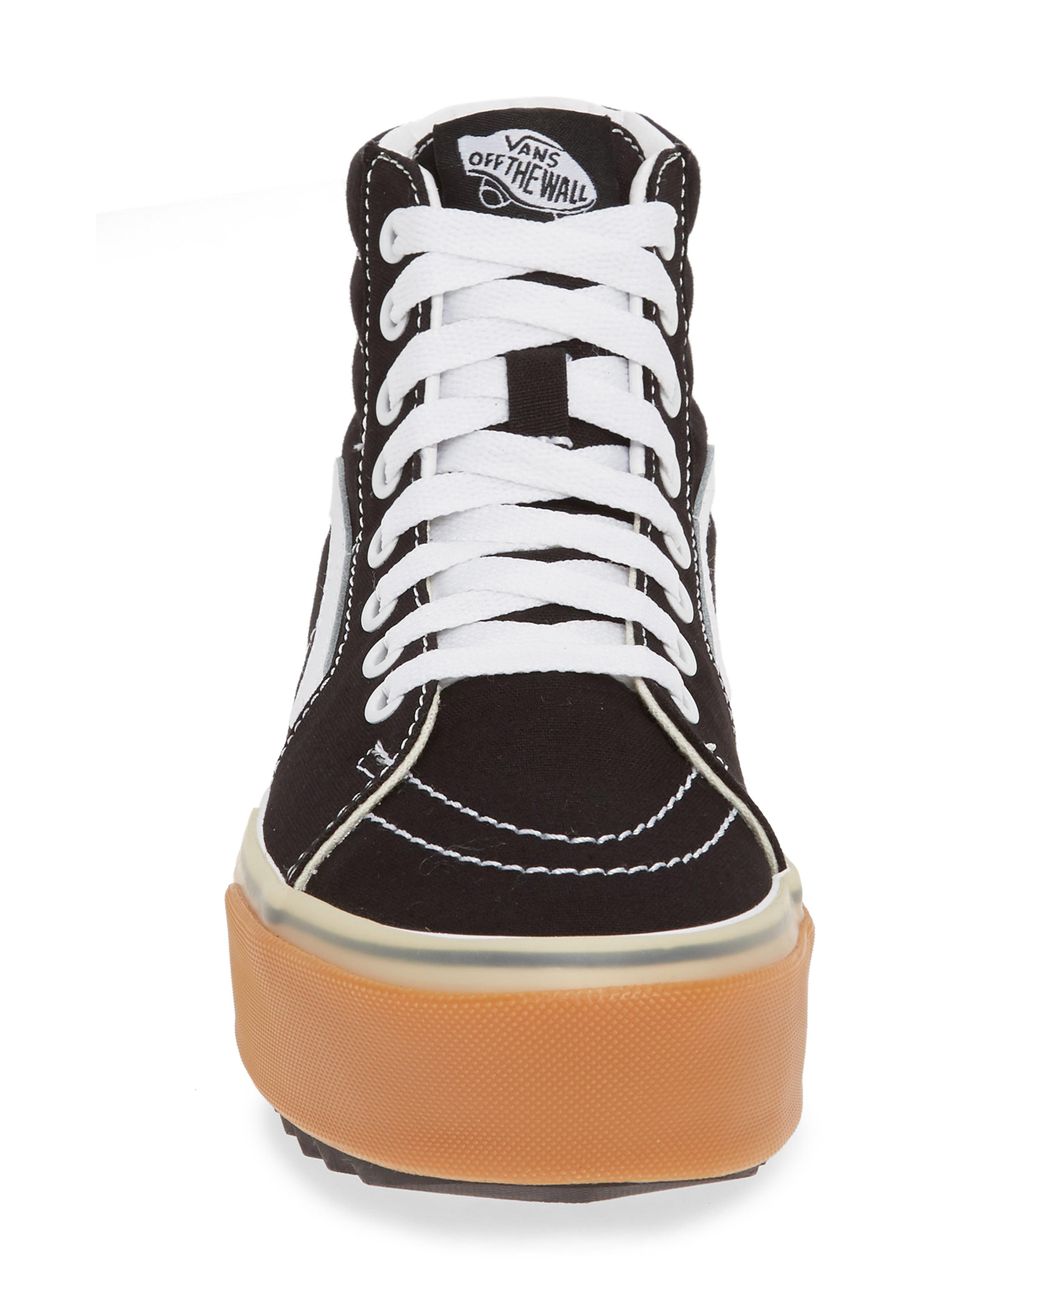 Vans Rubber Sk8-hi Stacked Check Platform High Top Sneaker in Black | Lyst